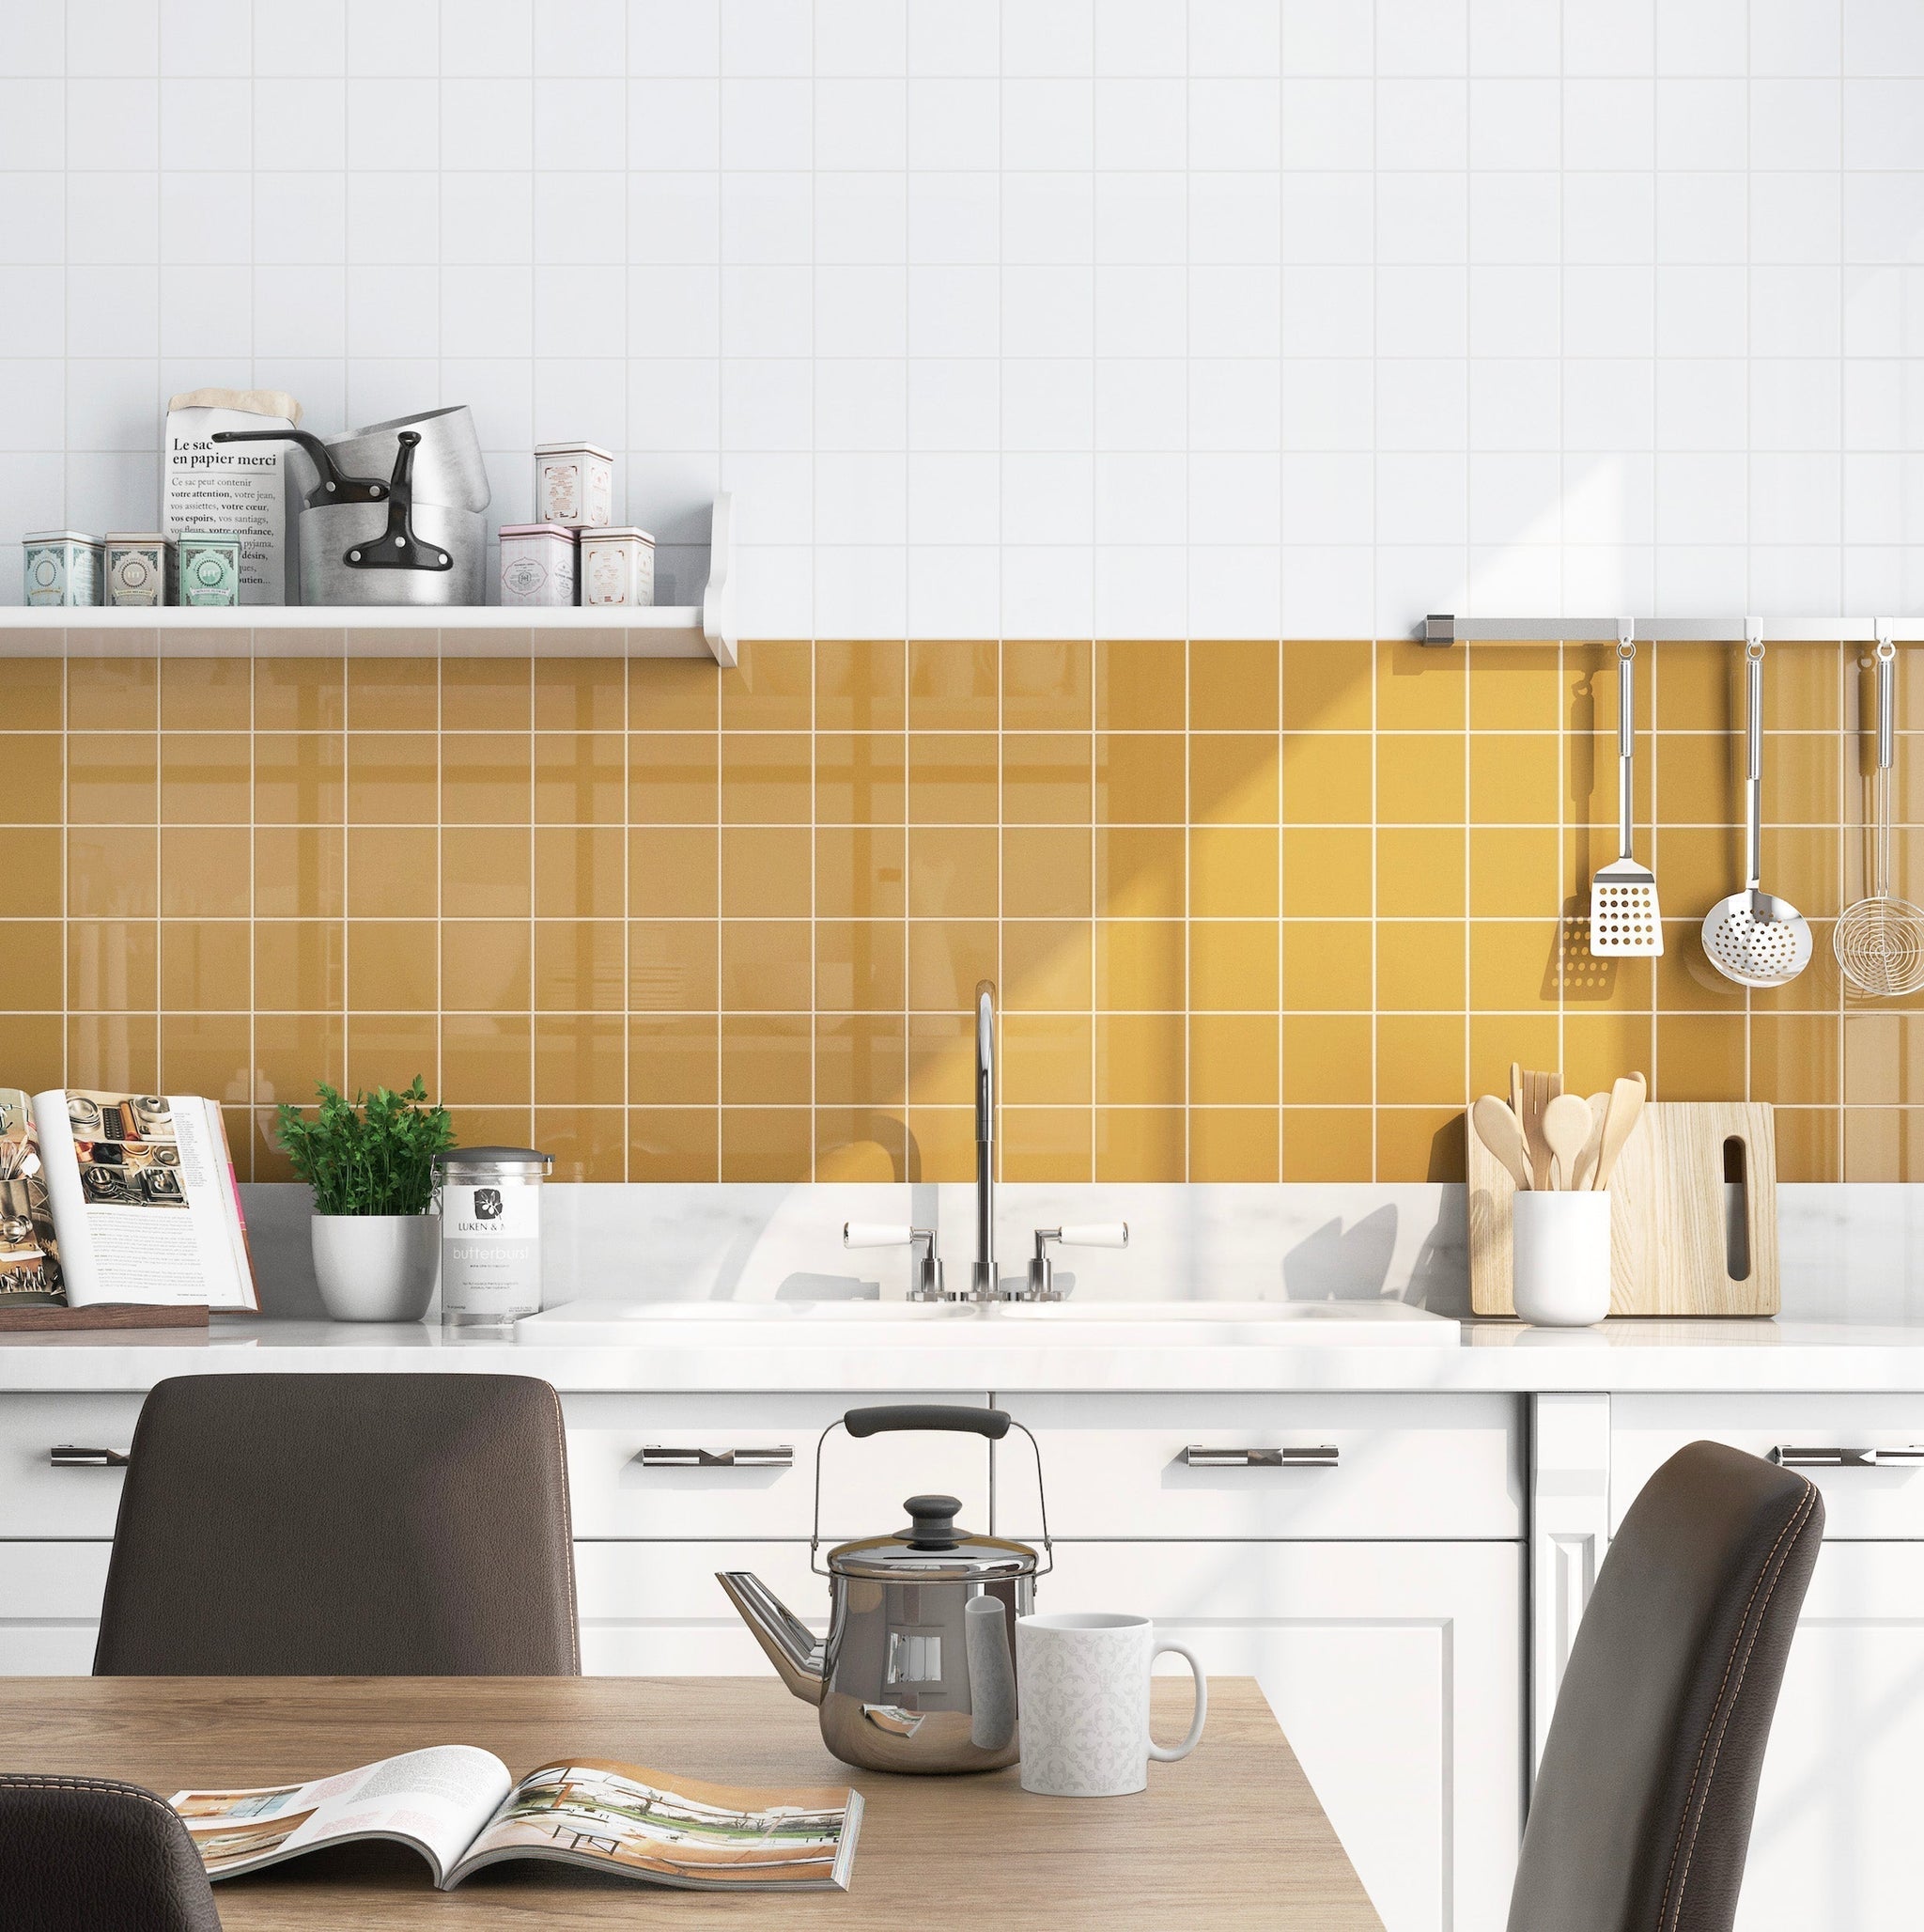 What to Consider When Choosing Kitchen Backsplash Tile